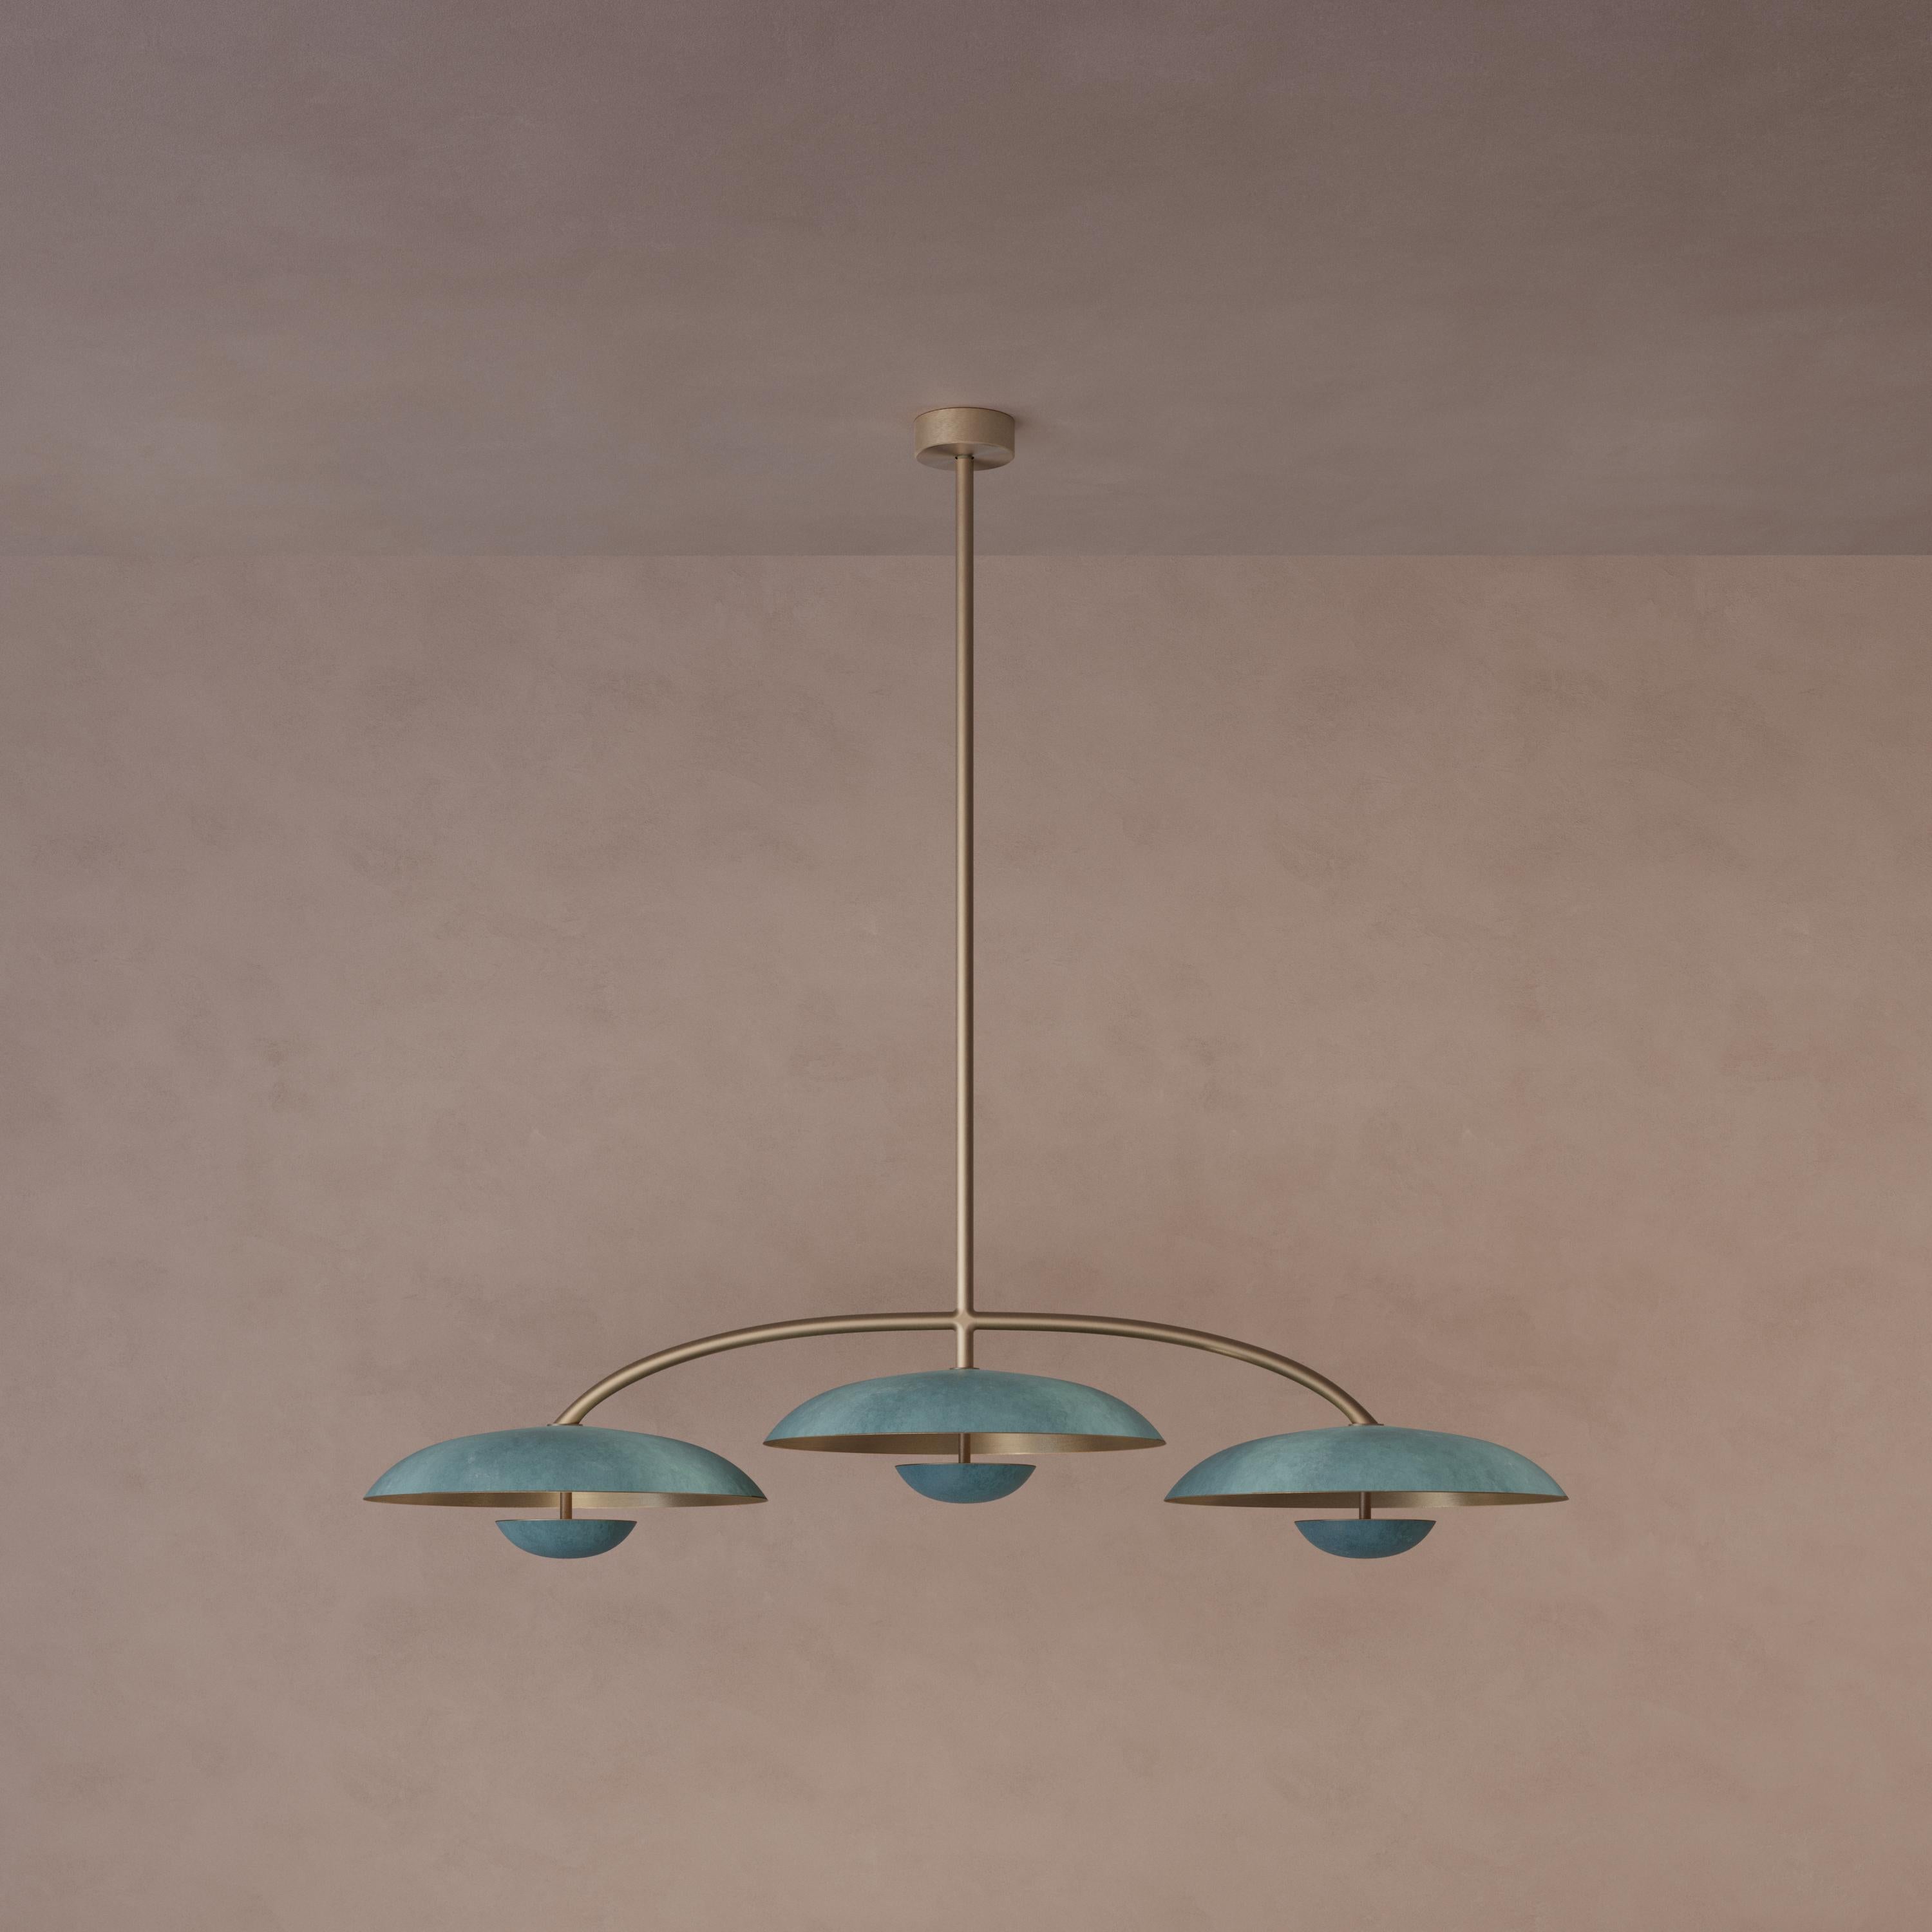 Organic Modern 'Orbit Trio Verdigris' Handmade Verdigris Patinated Brass Ceiling Light For Sale